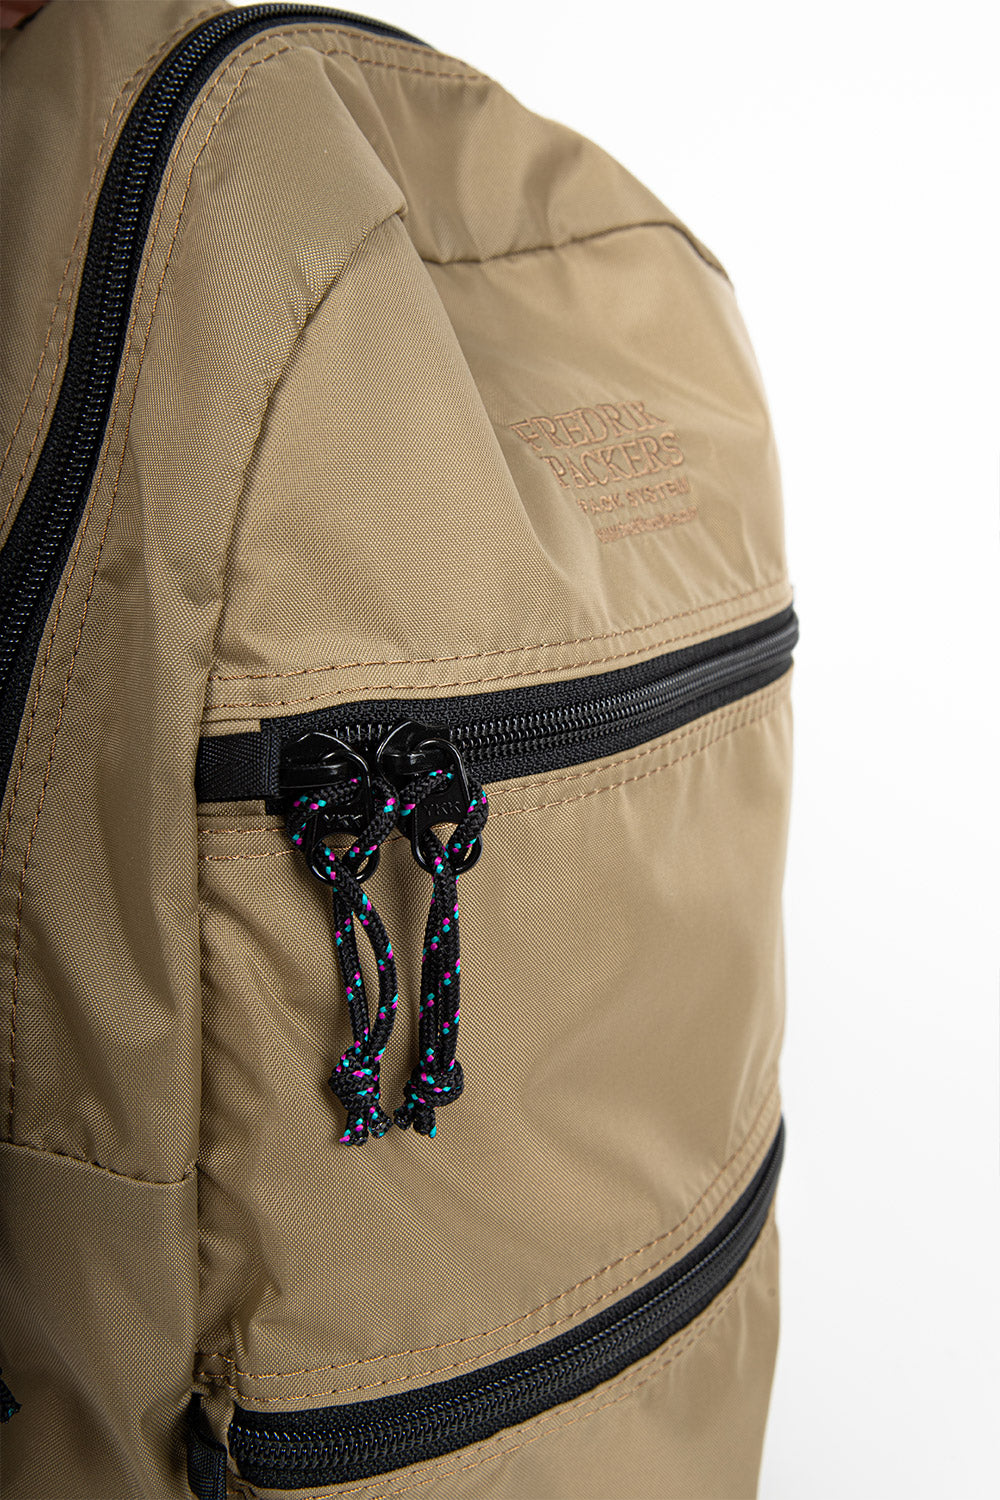 fredrik-packers-double-zip-backpack